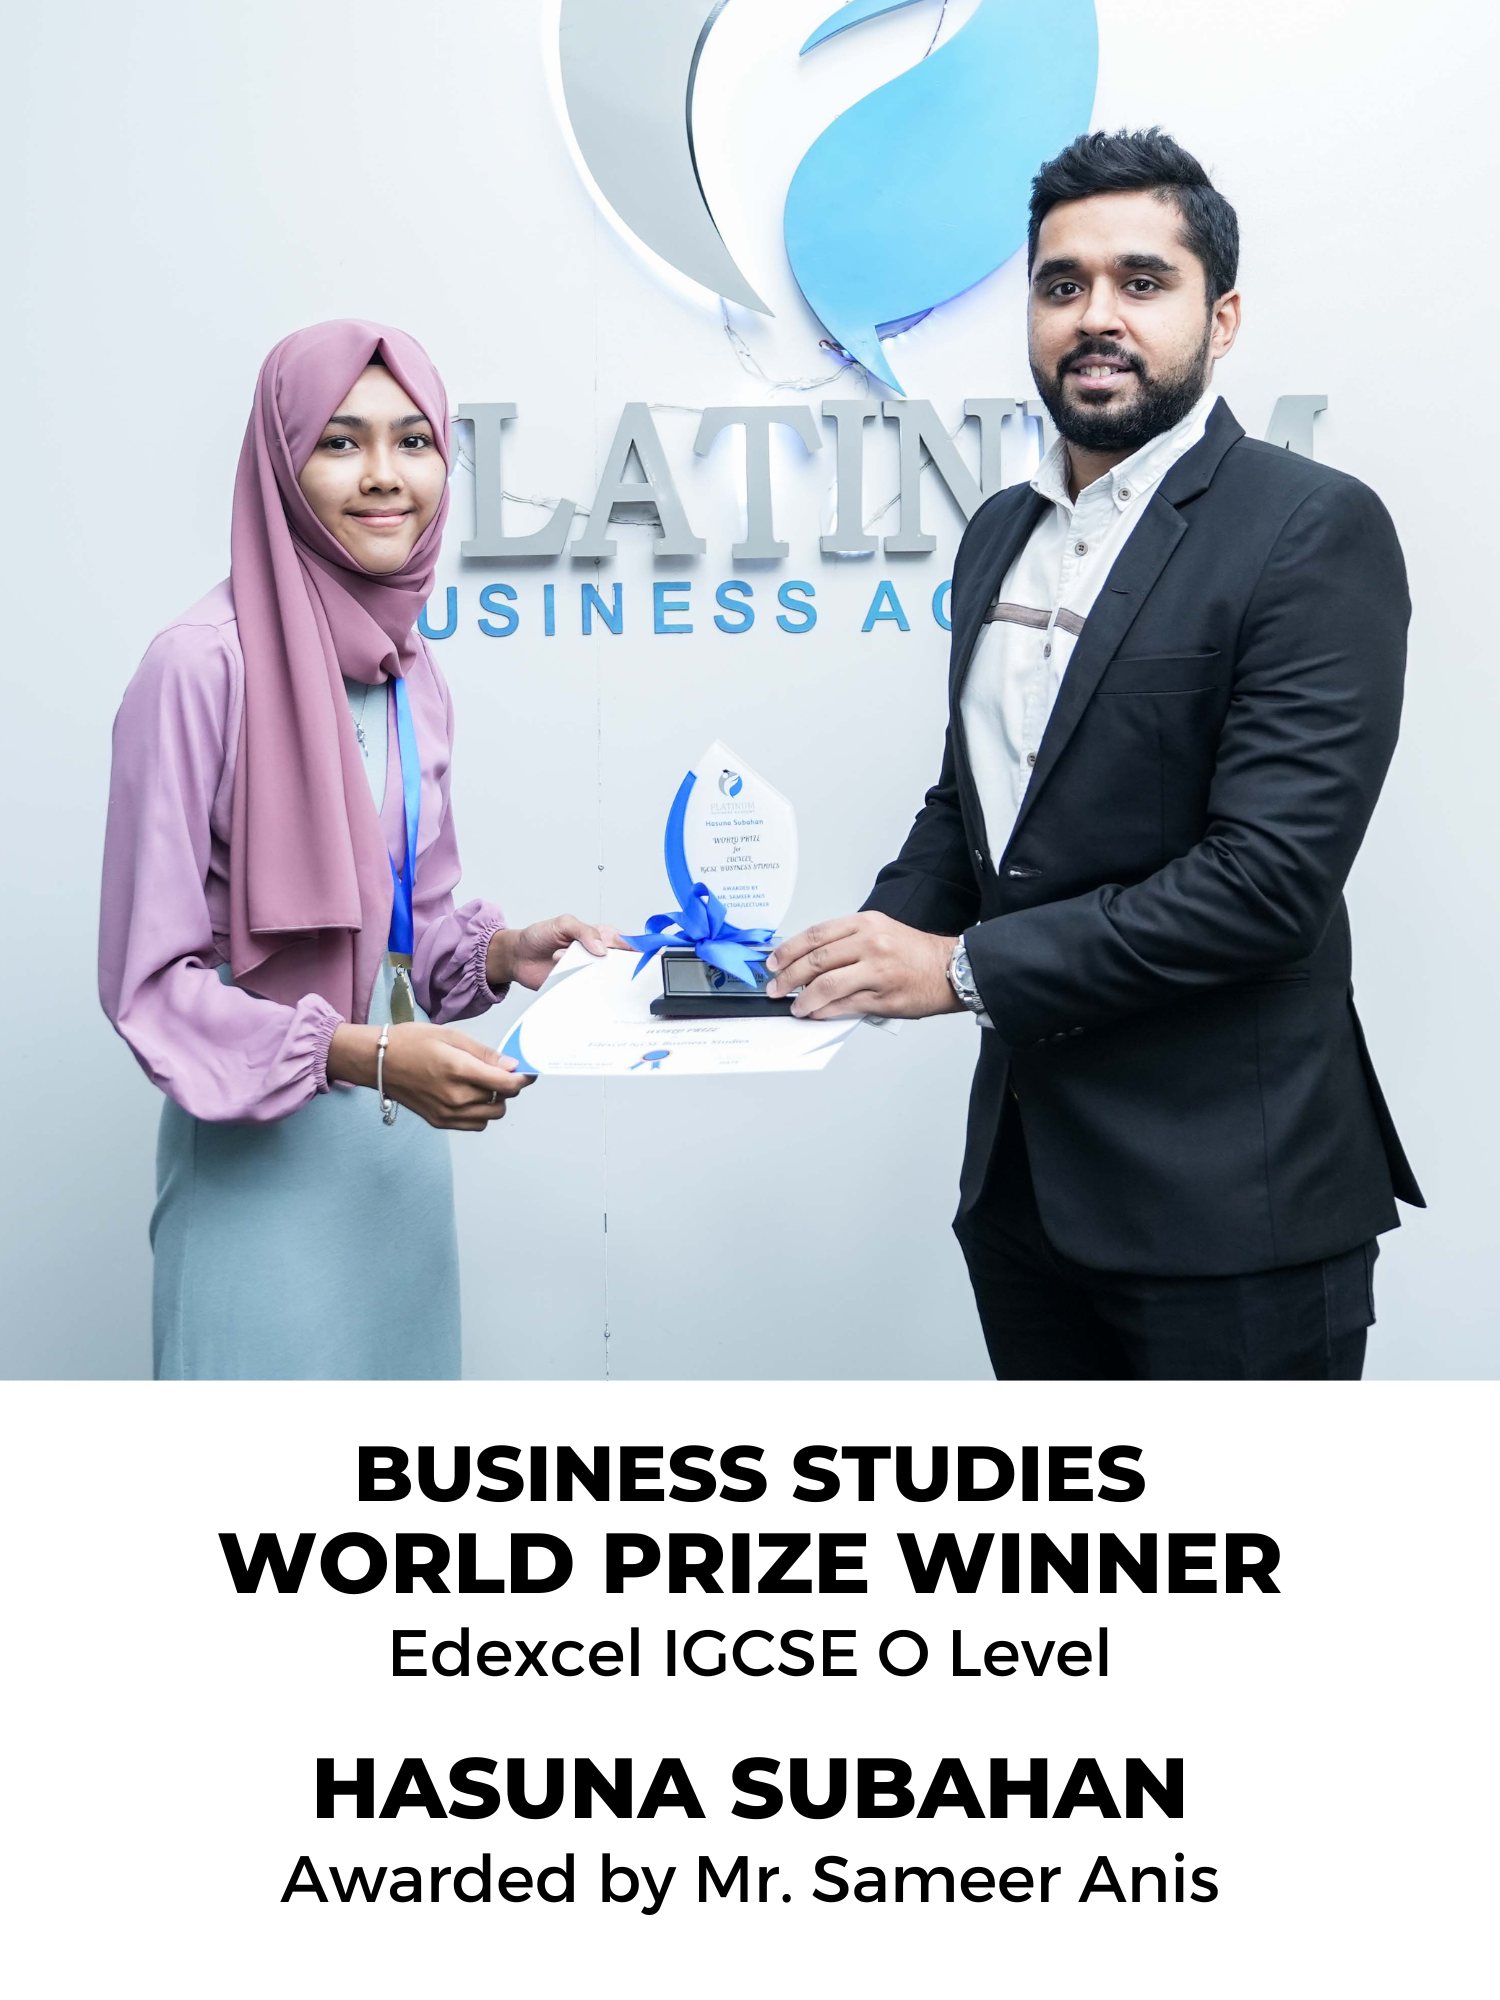 Edexcel O'Level Business Studies World Prize Winner: Hasuna Subahan
Lecturer: Mr. Sameer Anis